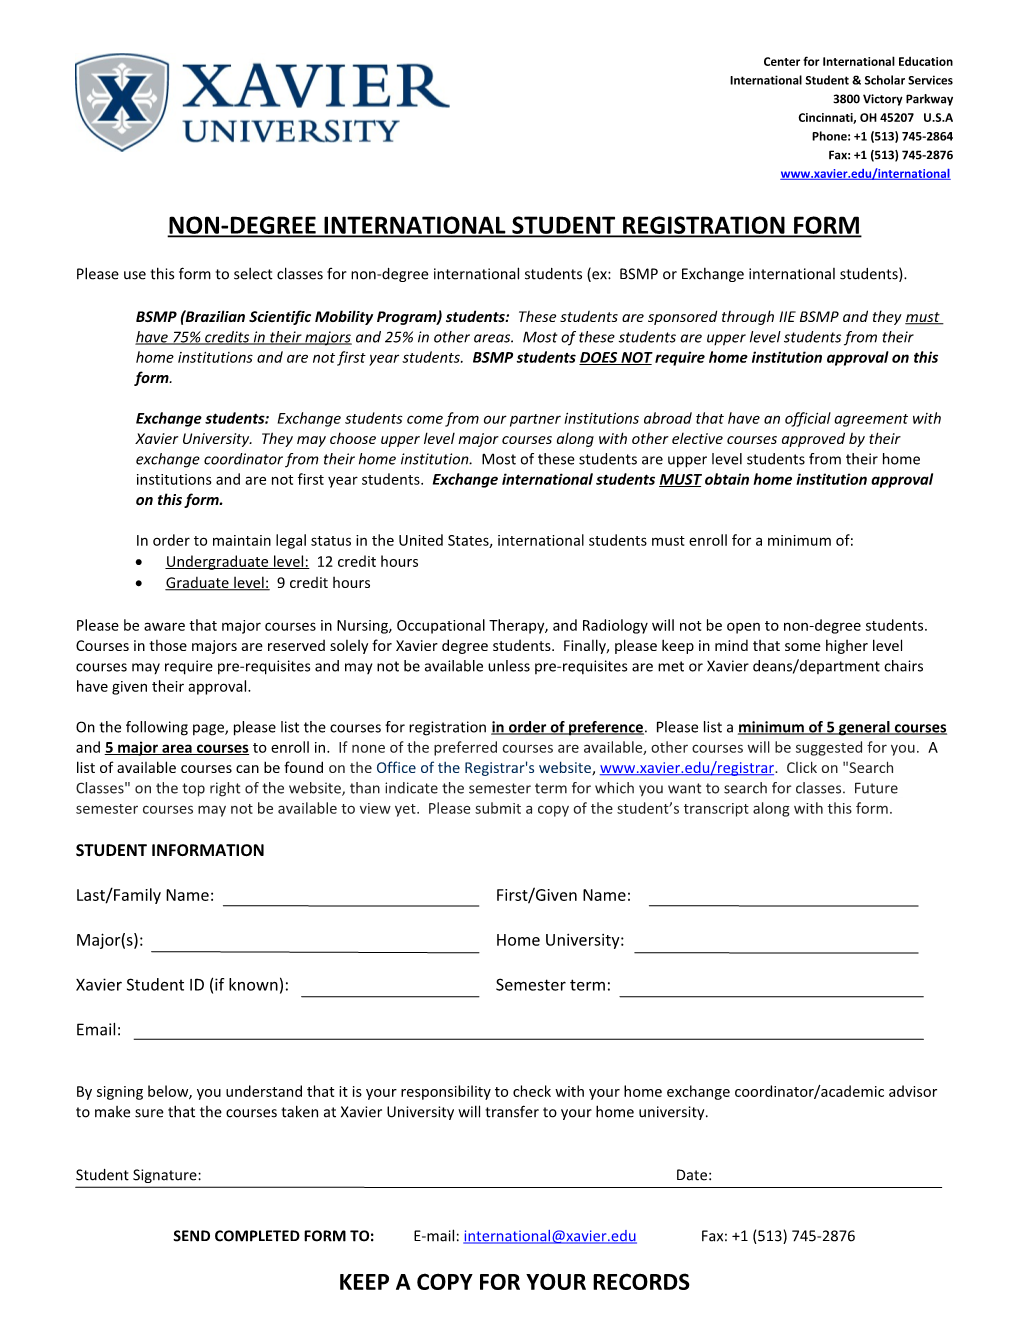 Non-Degree International Student Registration Form